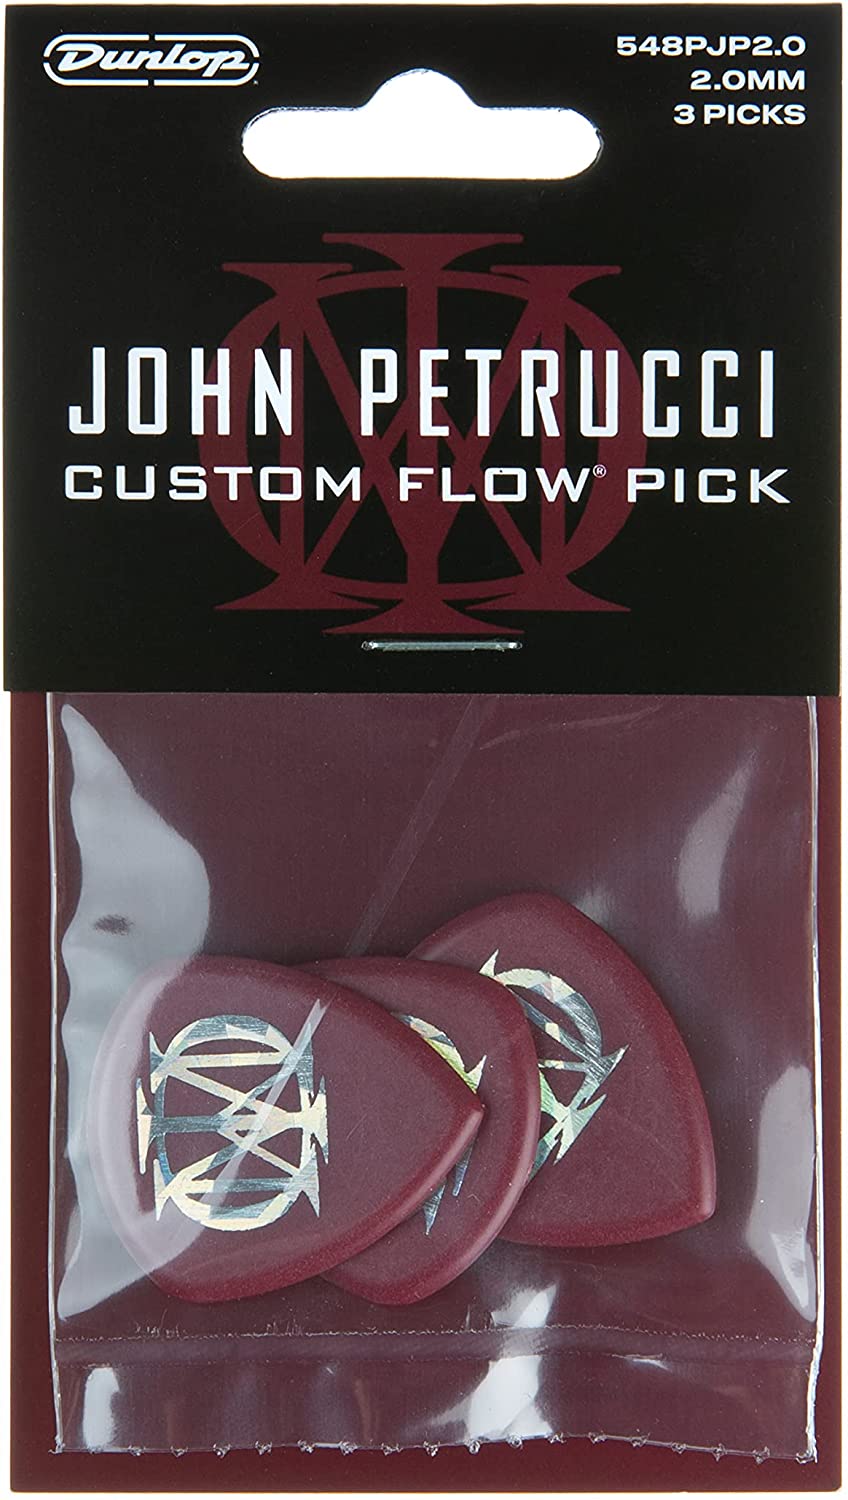 Dunlop John Petrucci Flow 2.0mm 3 Pack Guitar Picks (548PJP2.0)-(7675695890687)